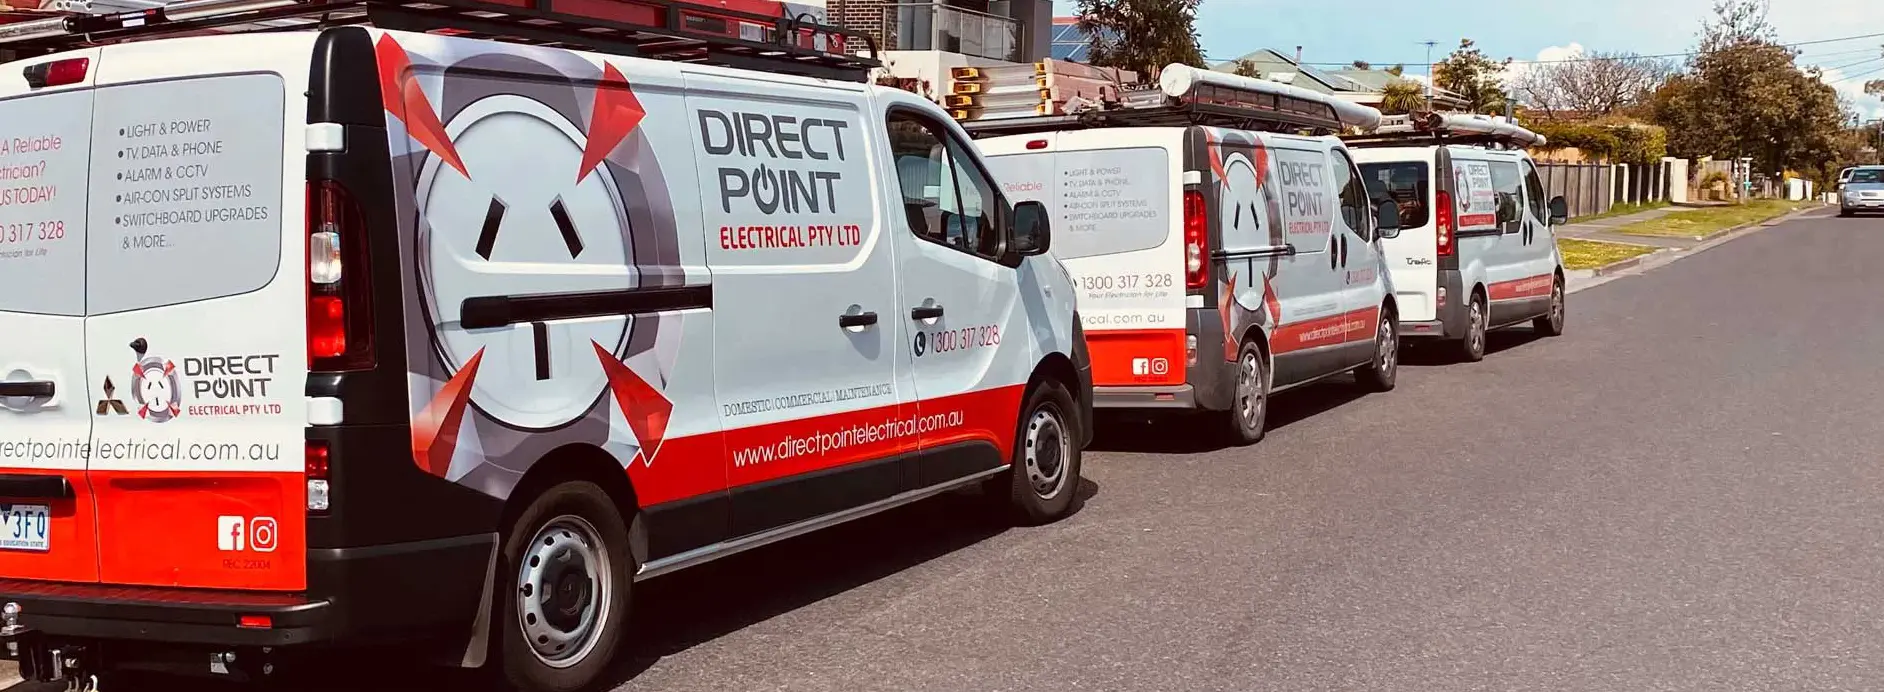 Direct Point Electrical Melbourne Workmanship